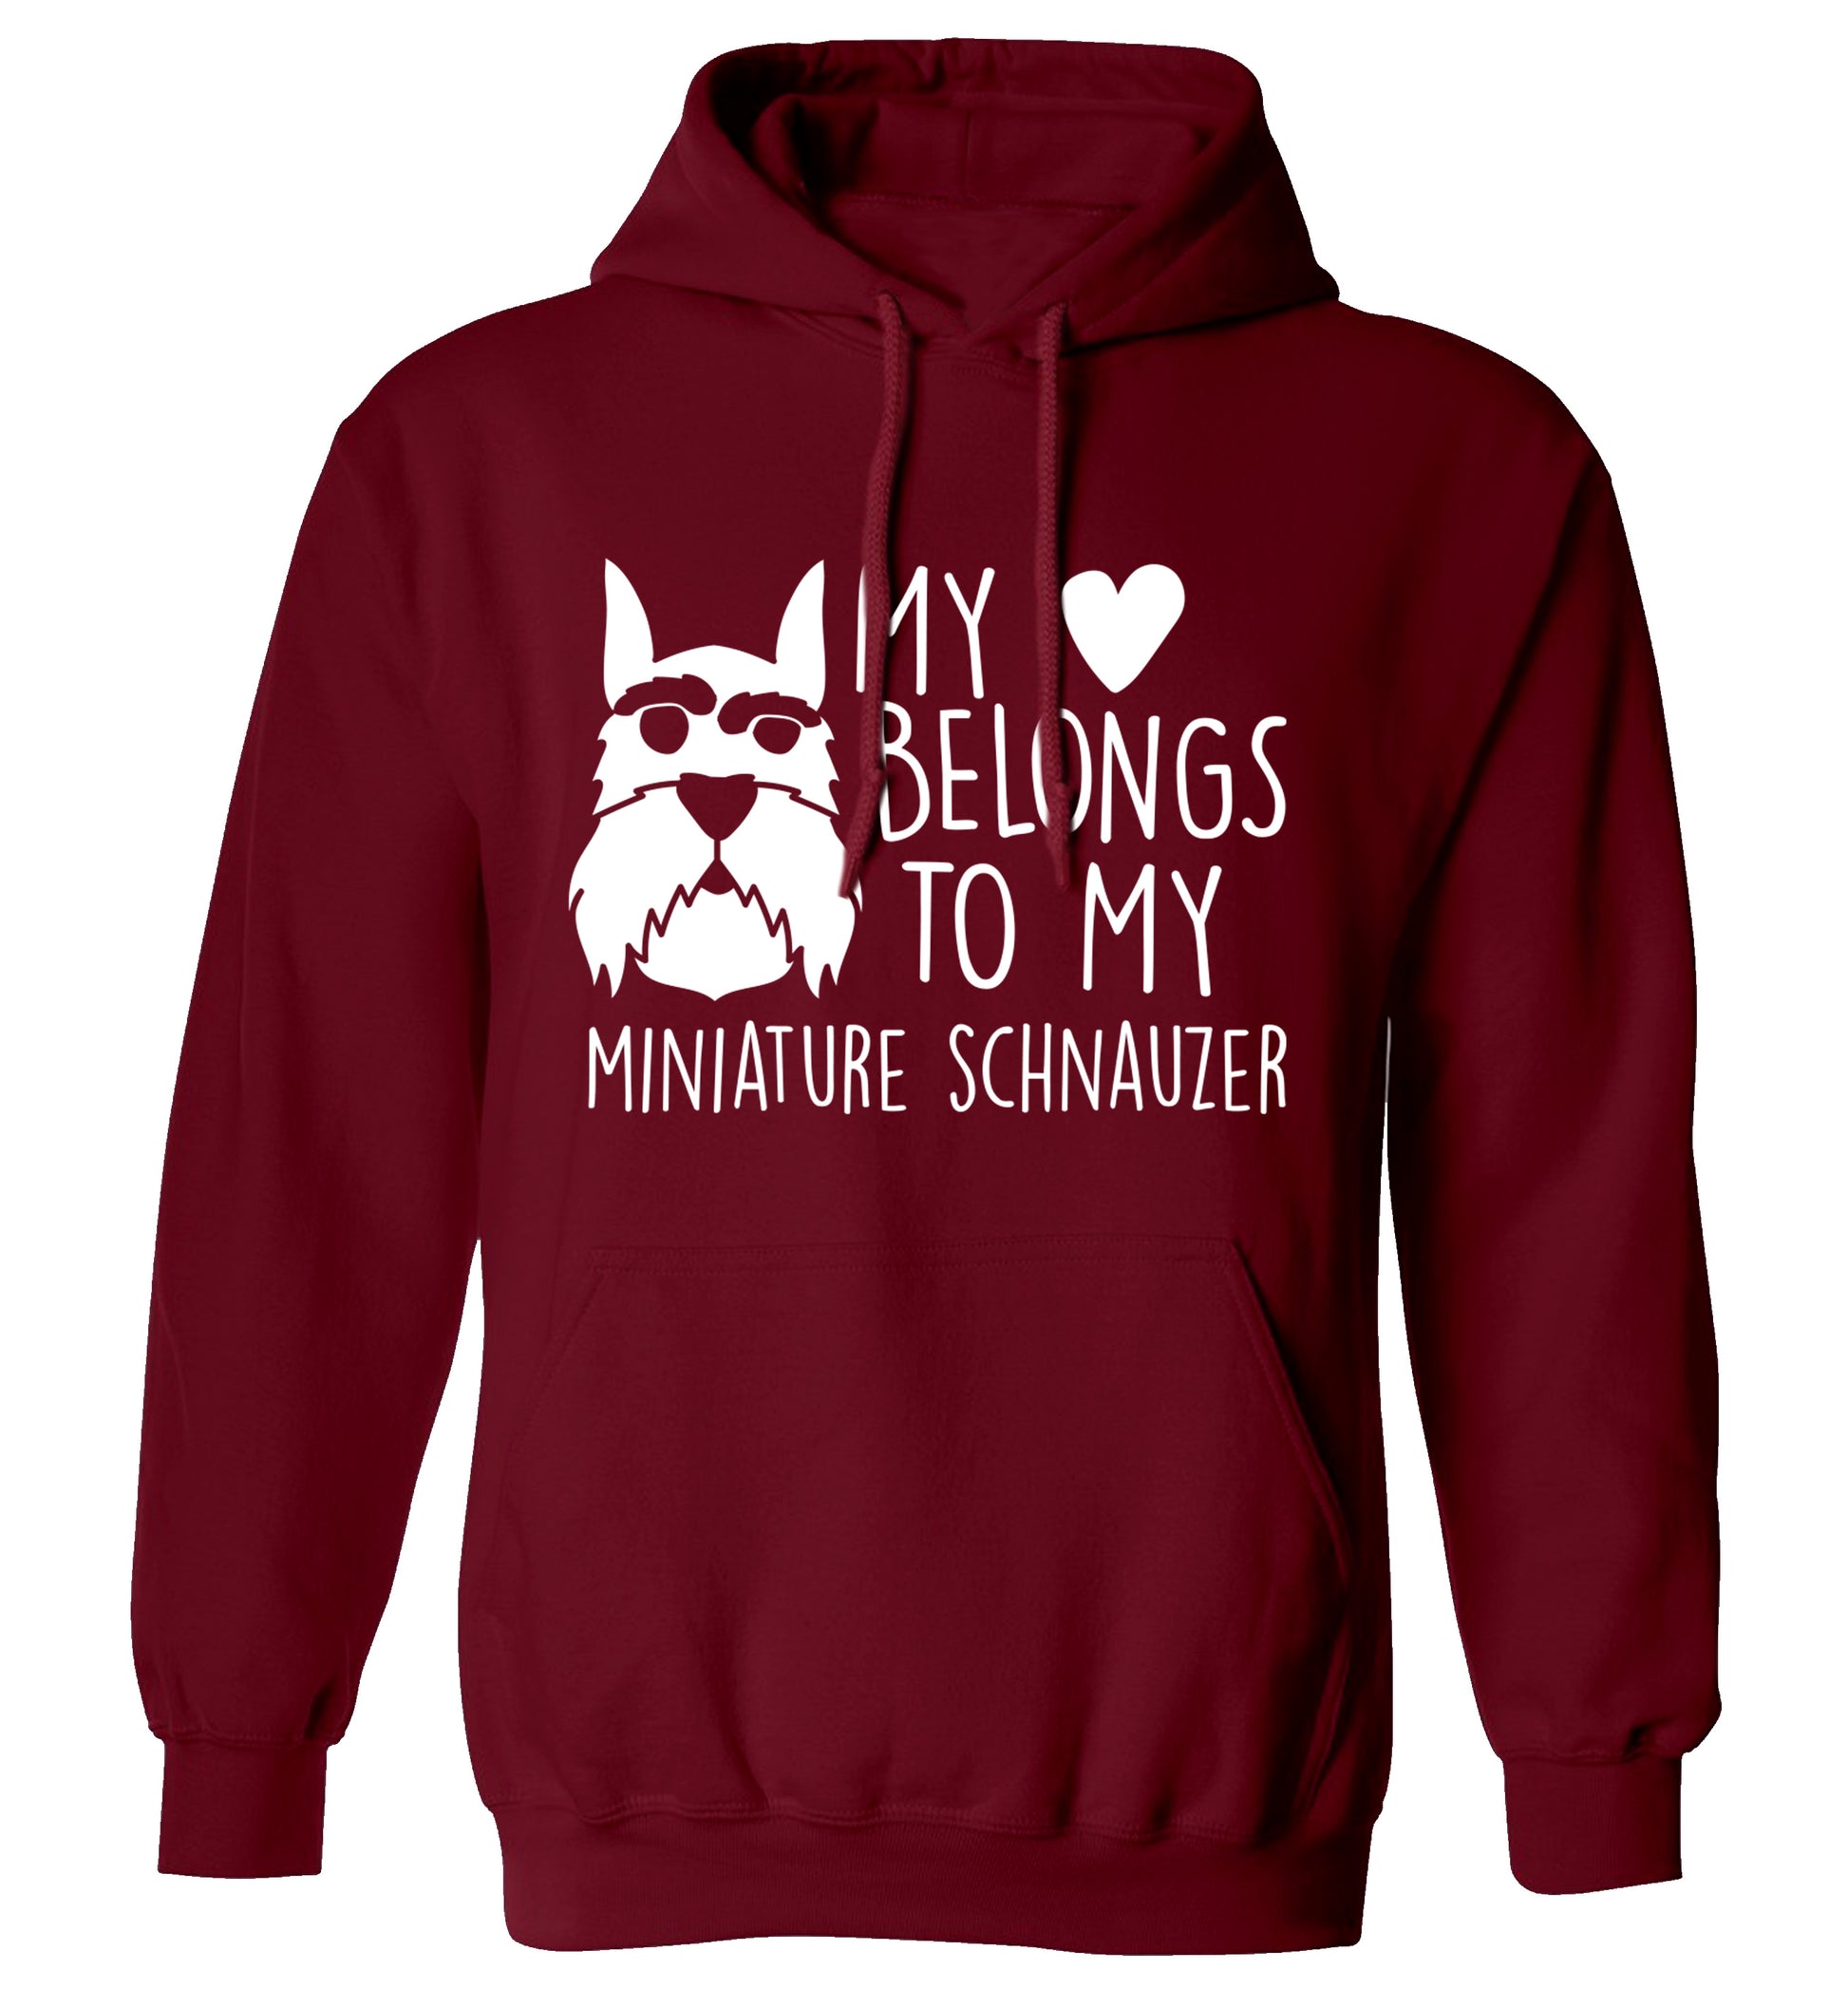 My heart belongs to my miniature schnauzer adults unisex maroon hoodie 2XL